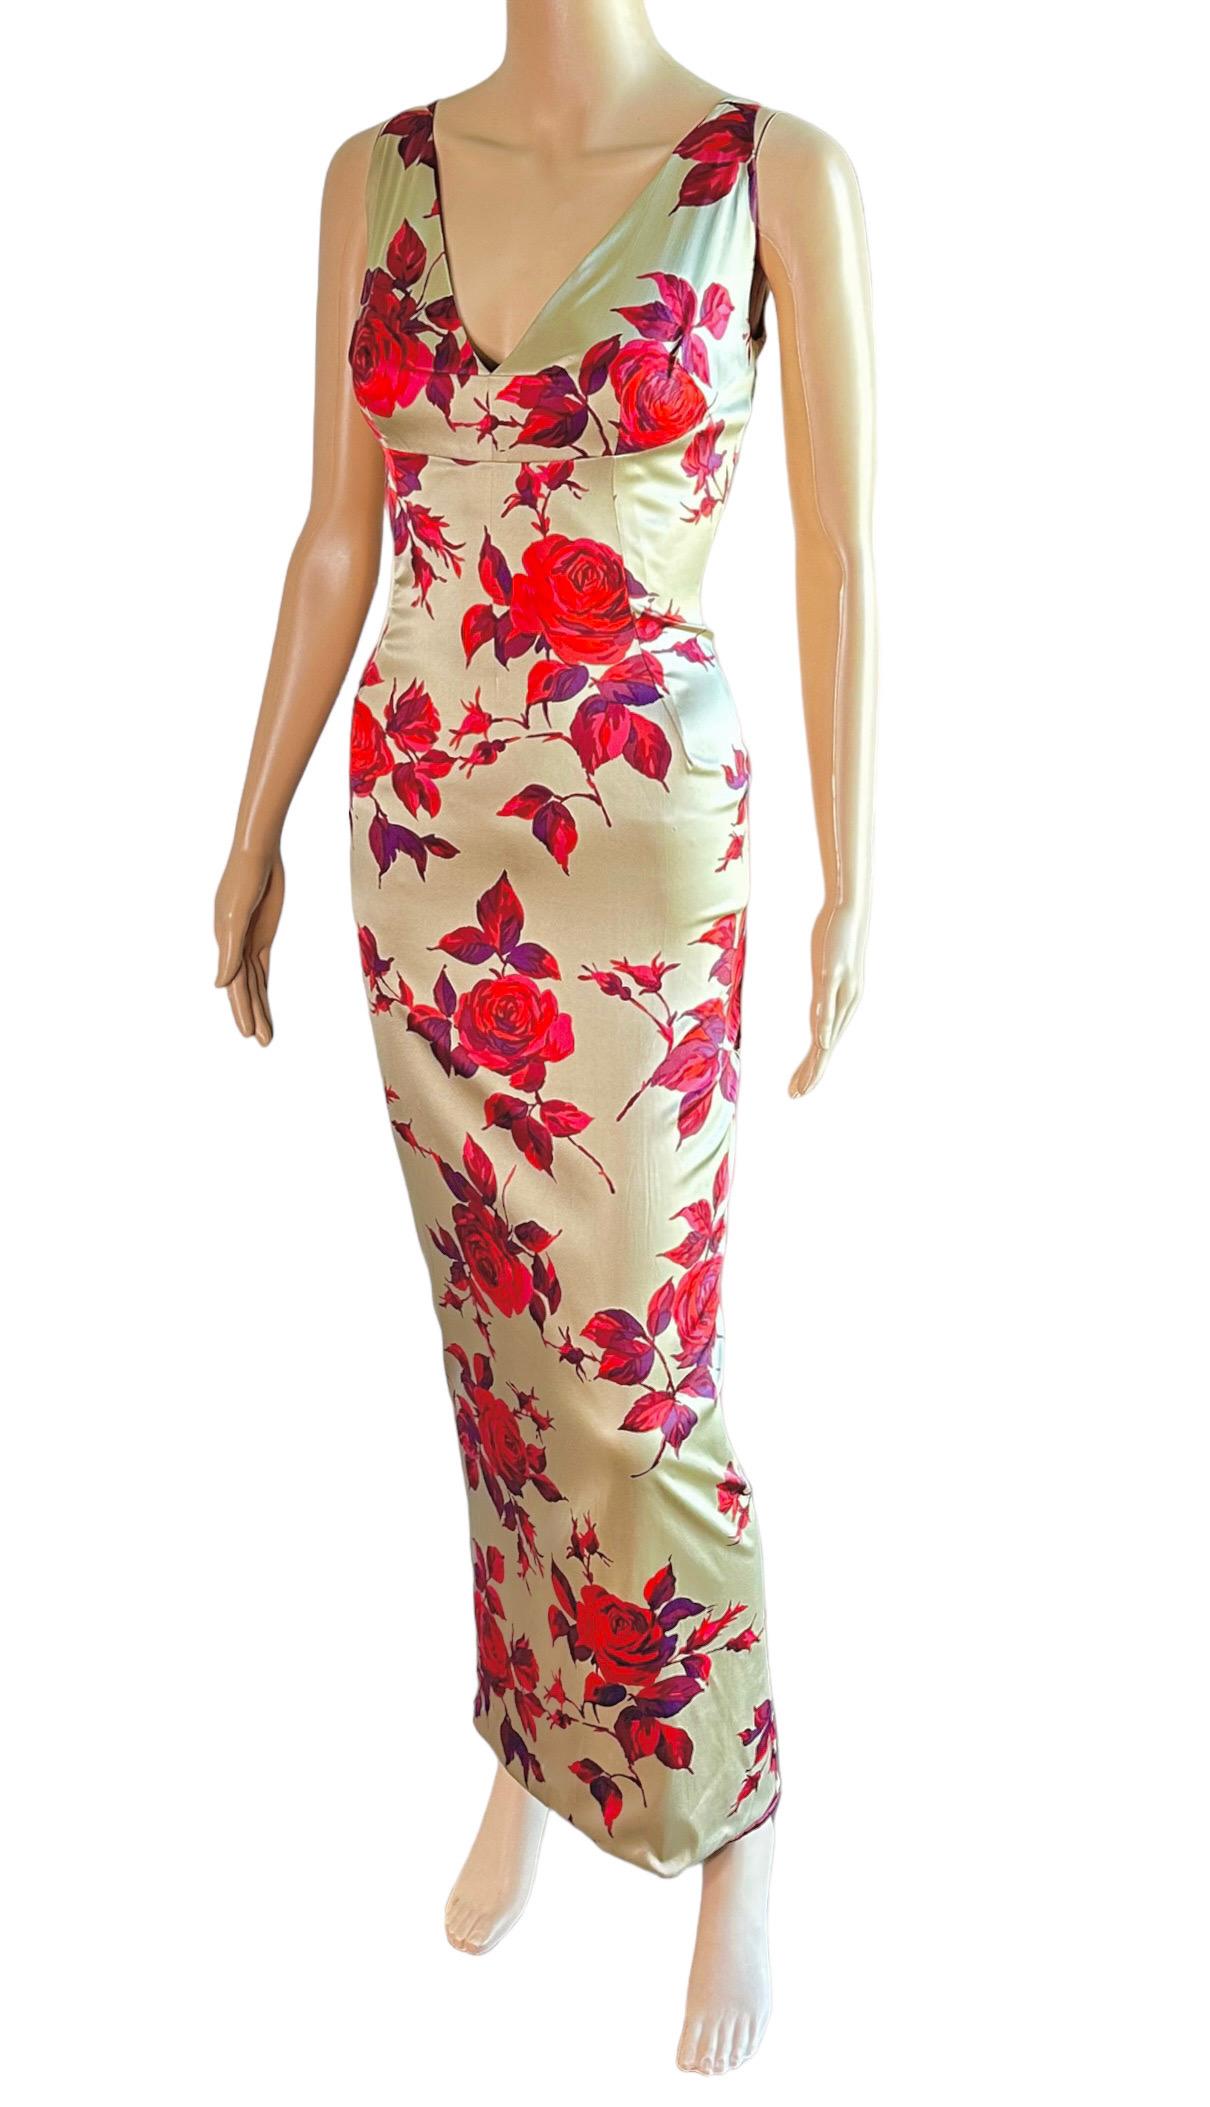 Dolce & Gabbana 1990's Vintage Unworn Silk Floral Rose Print Evening Dress Gown For Sale 1